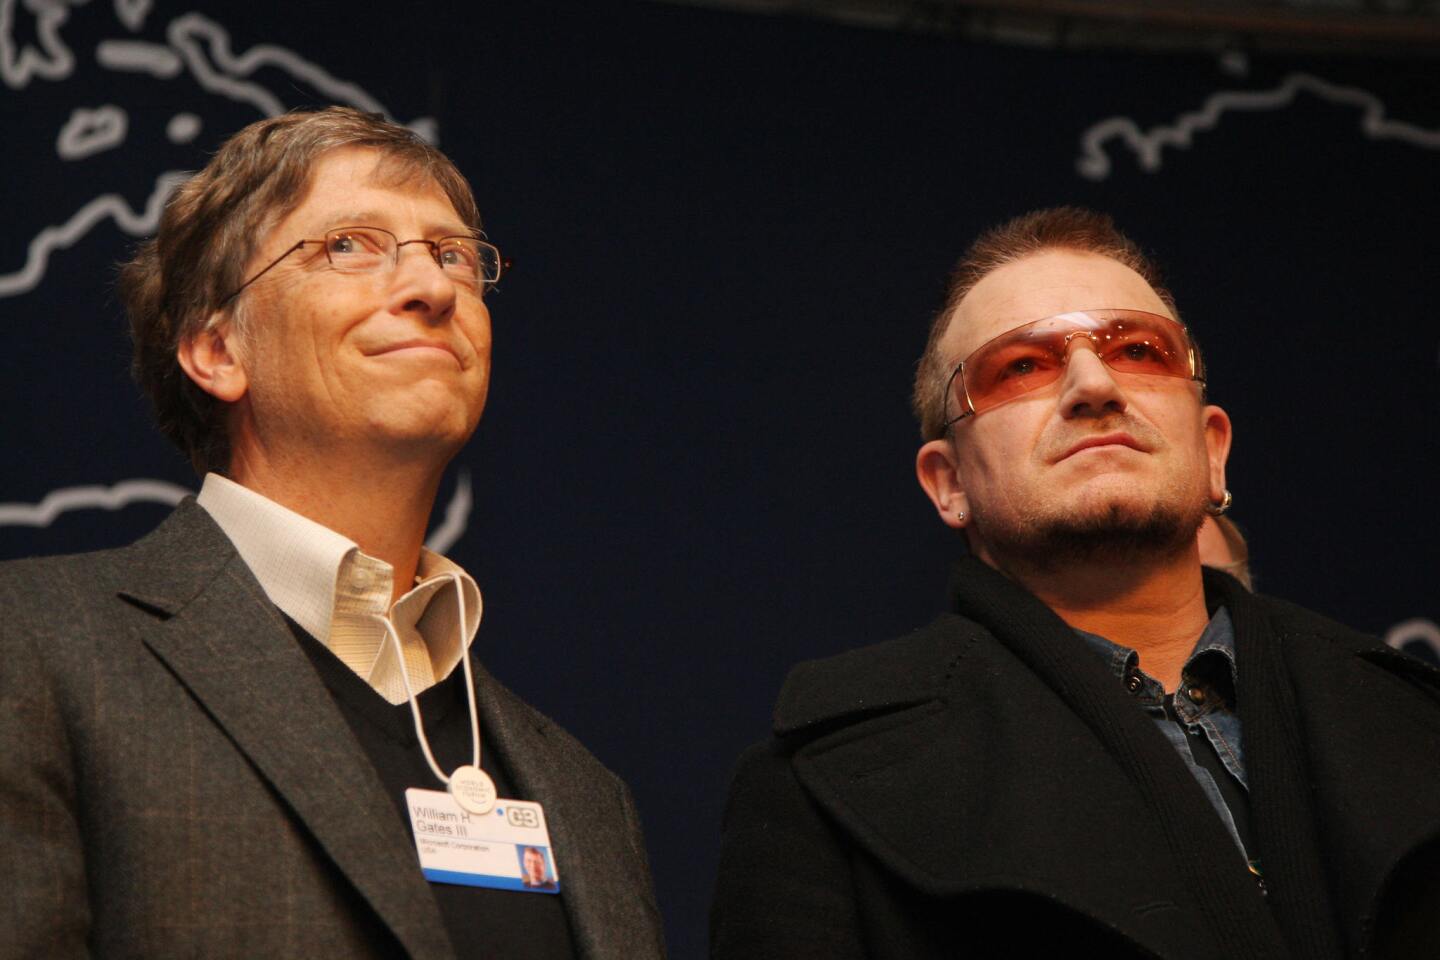 Bill Gates, Melinda Gates and Bono